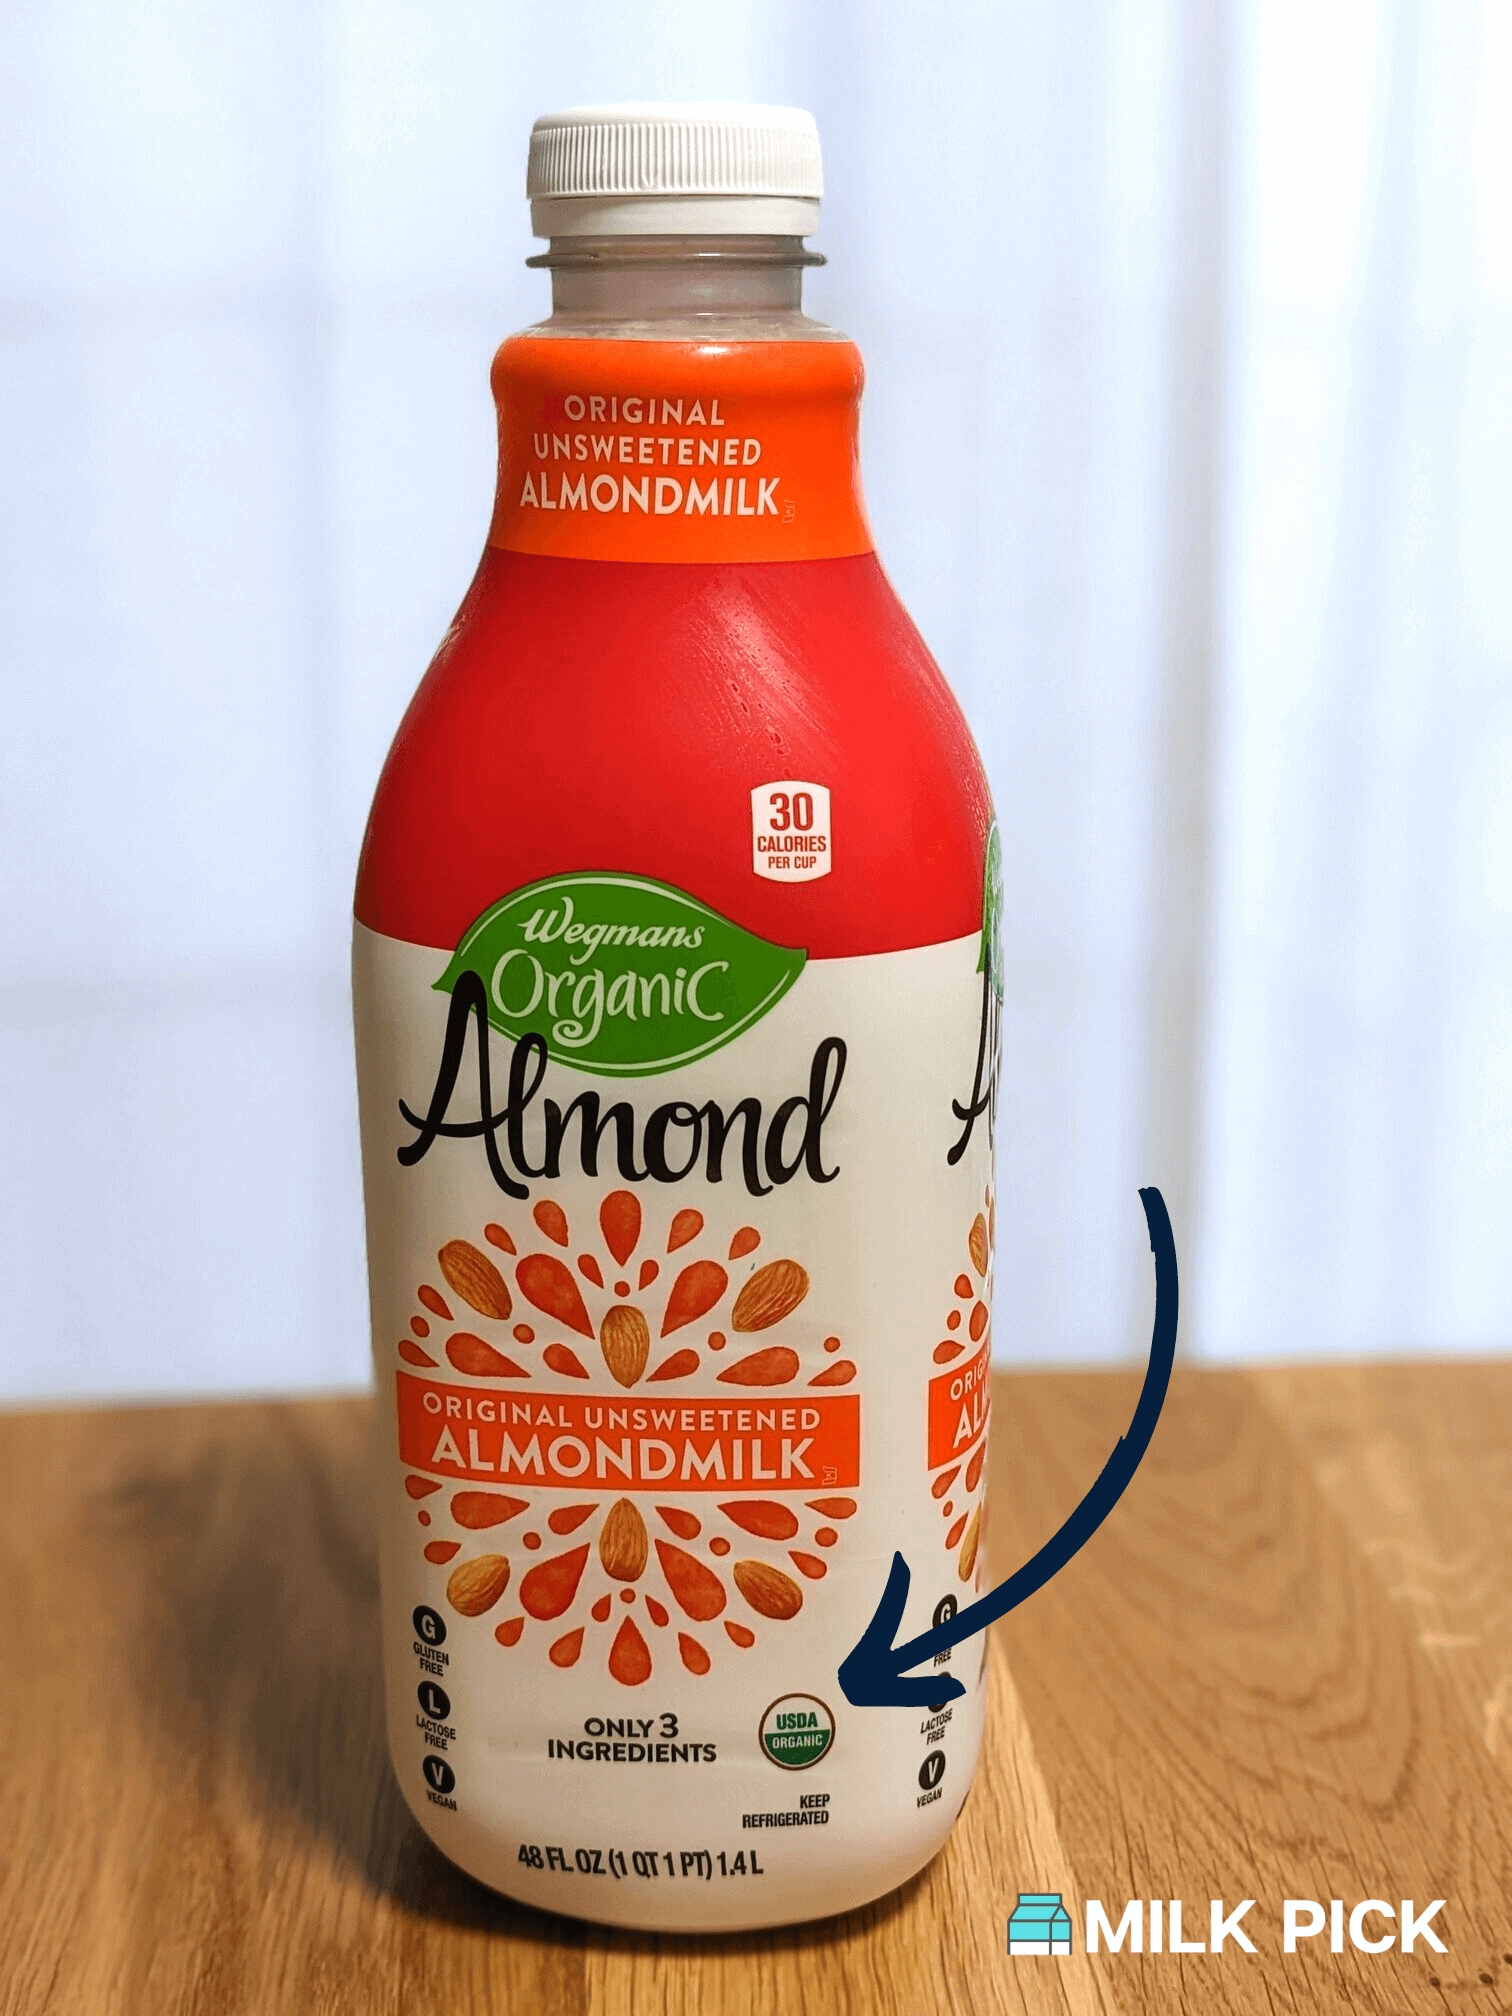 wegmans organic almond milk with arrow pointing to USDA organic symbol